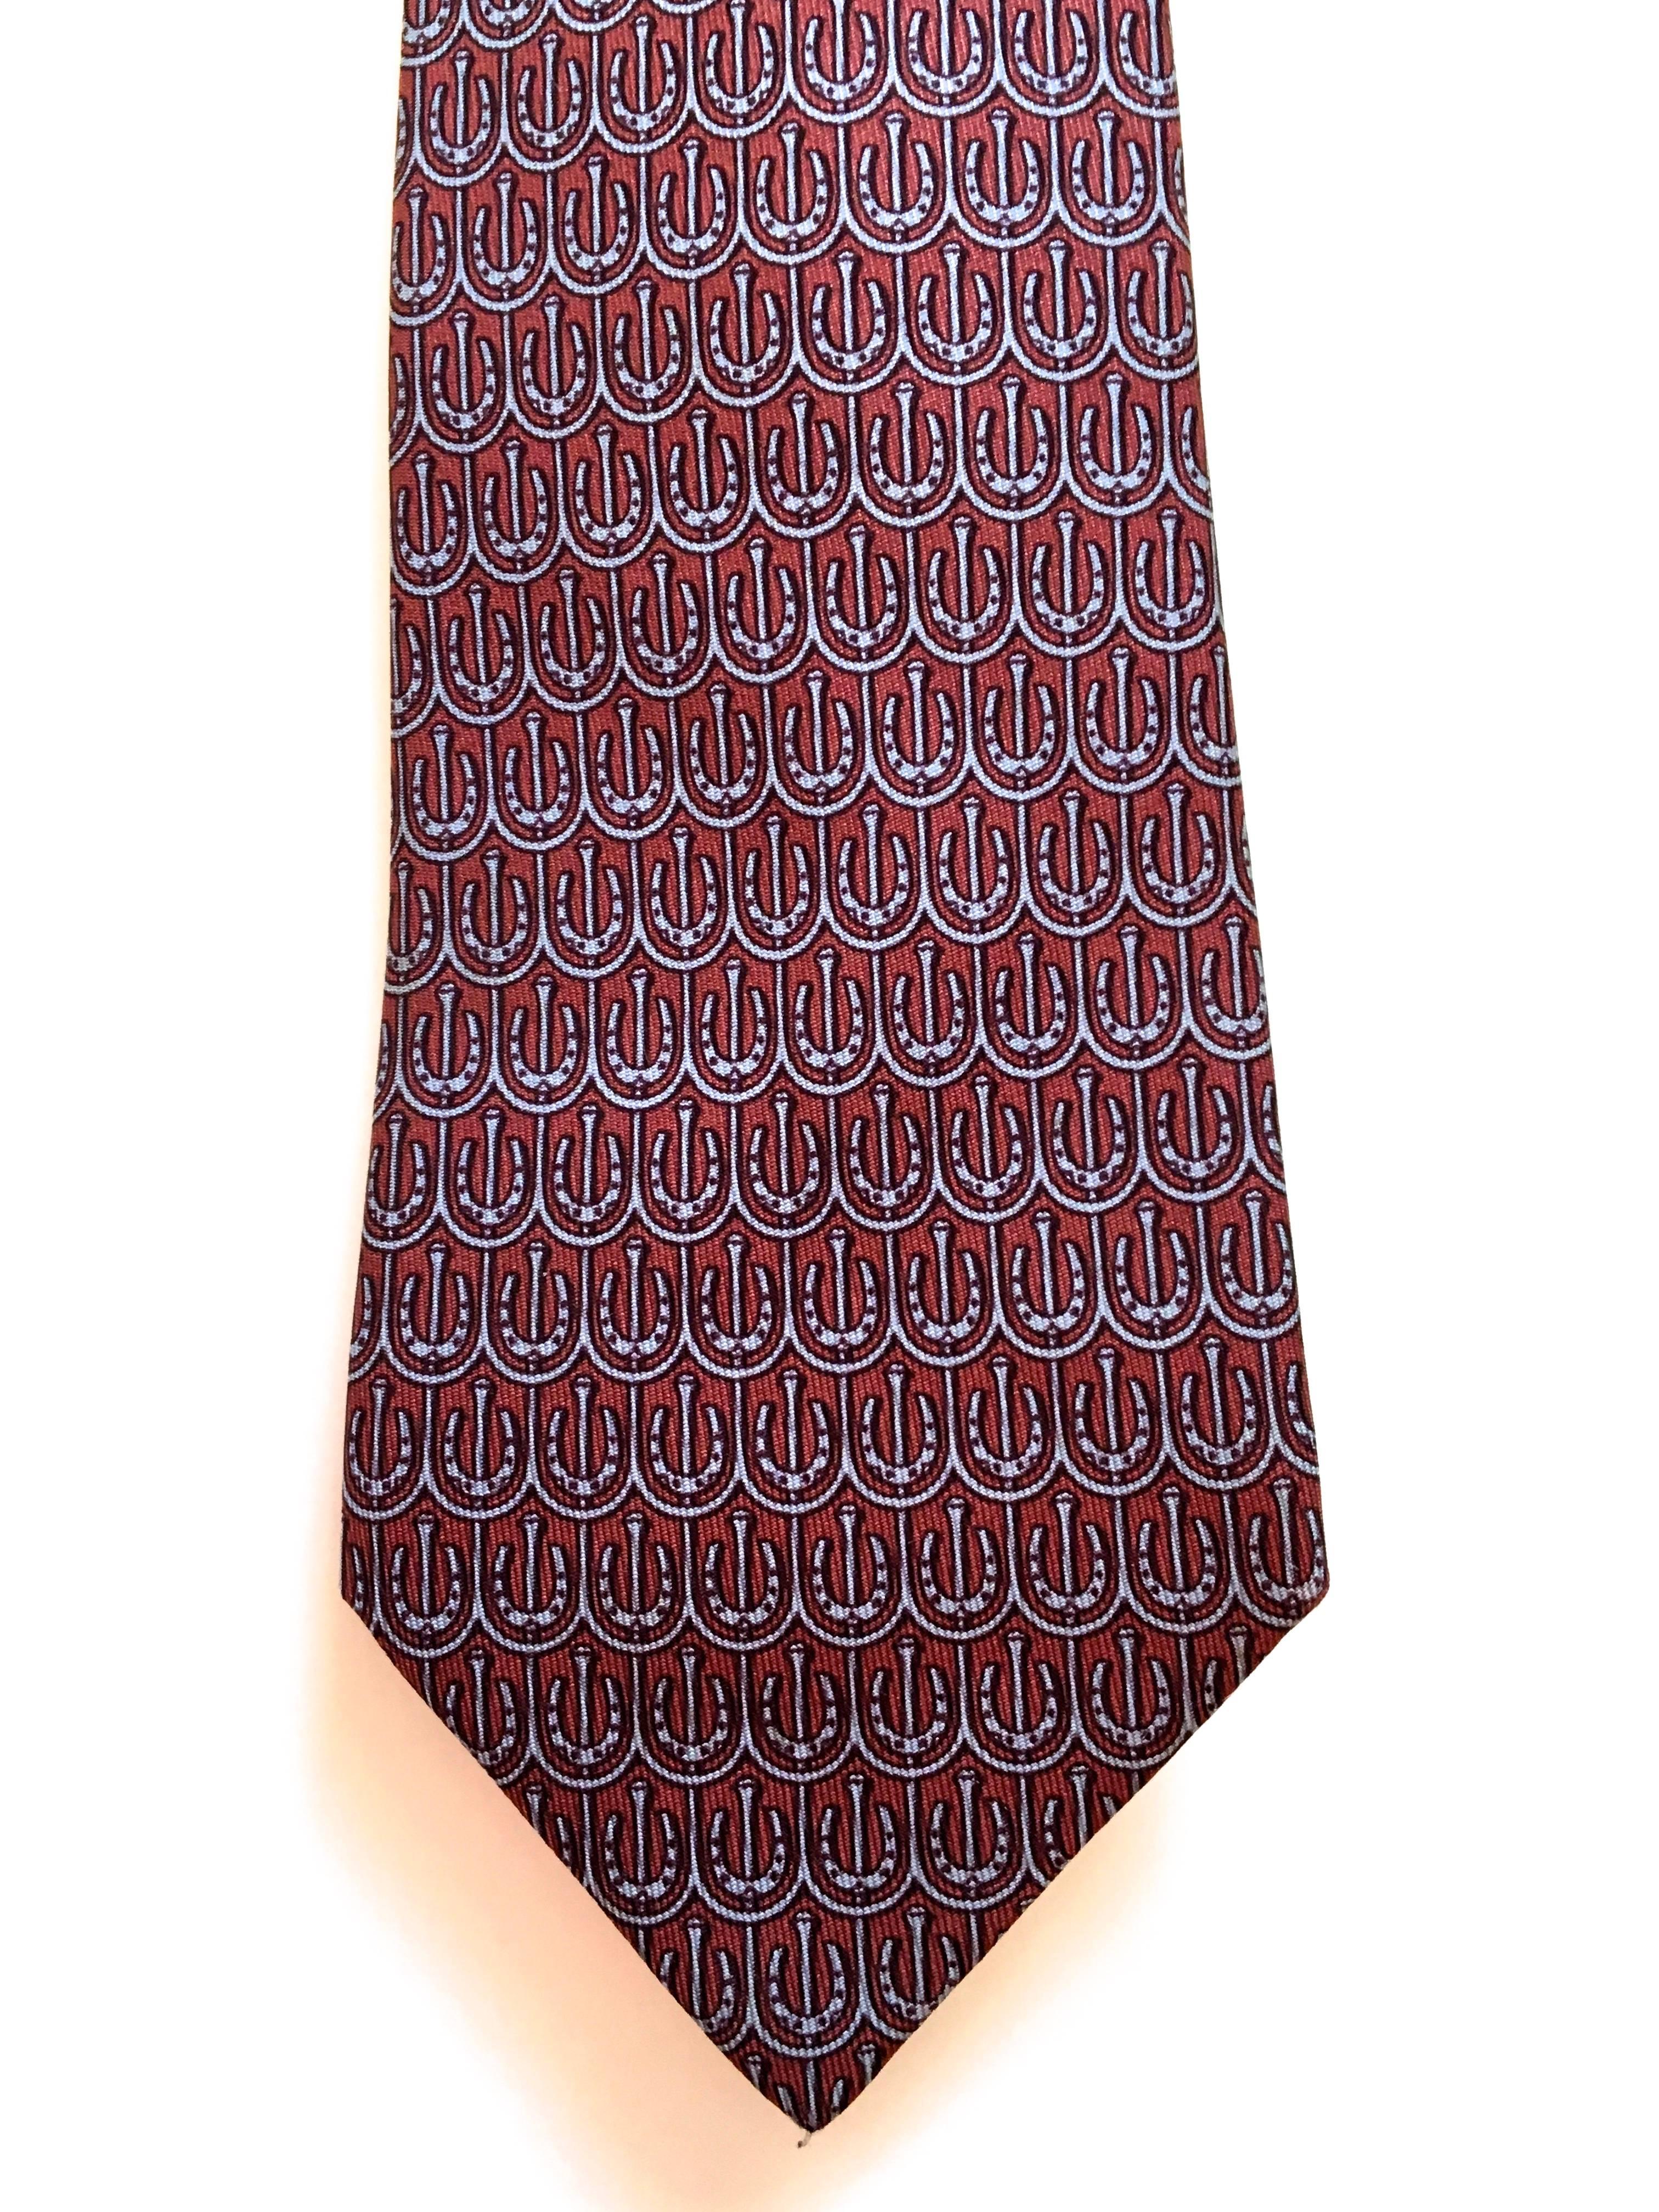 Women's or Men's Vintage Hermes Tie - 100% Silk